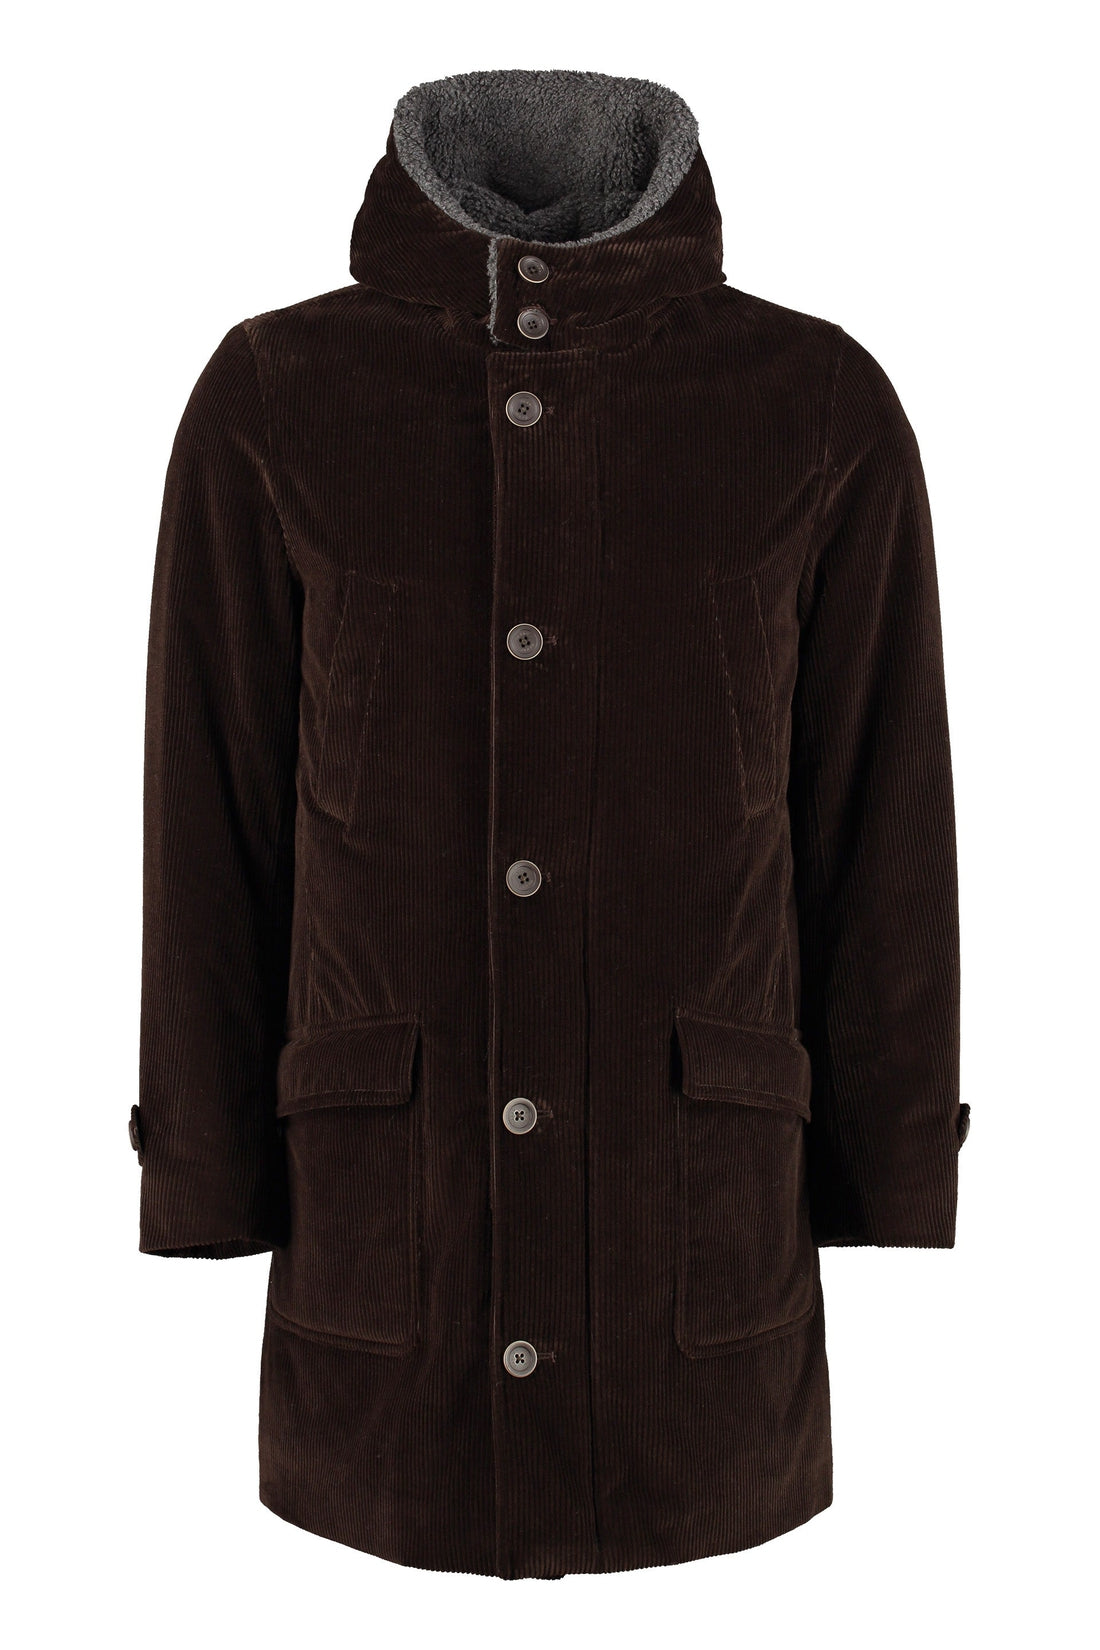 Herno-OUTLET-SALE-Corduroy coat-ARCHIVIST